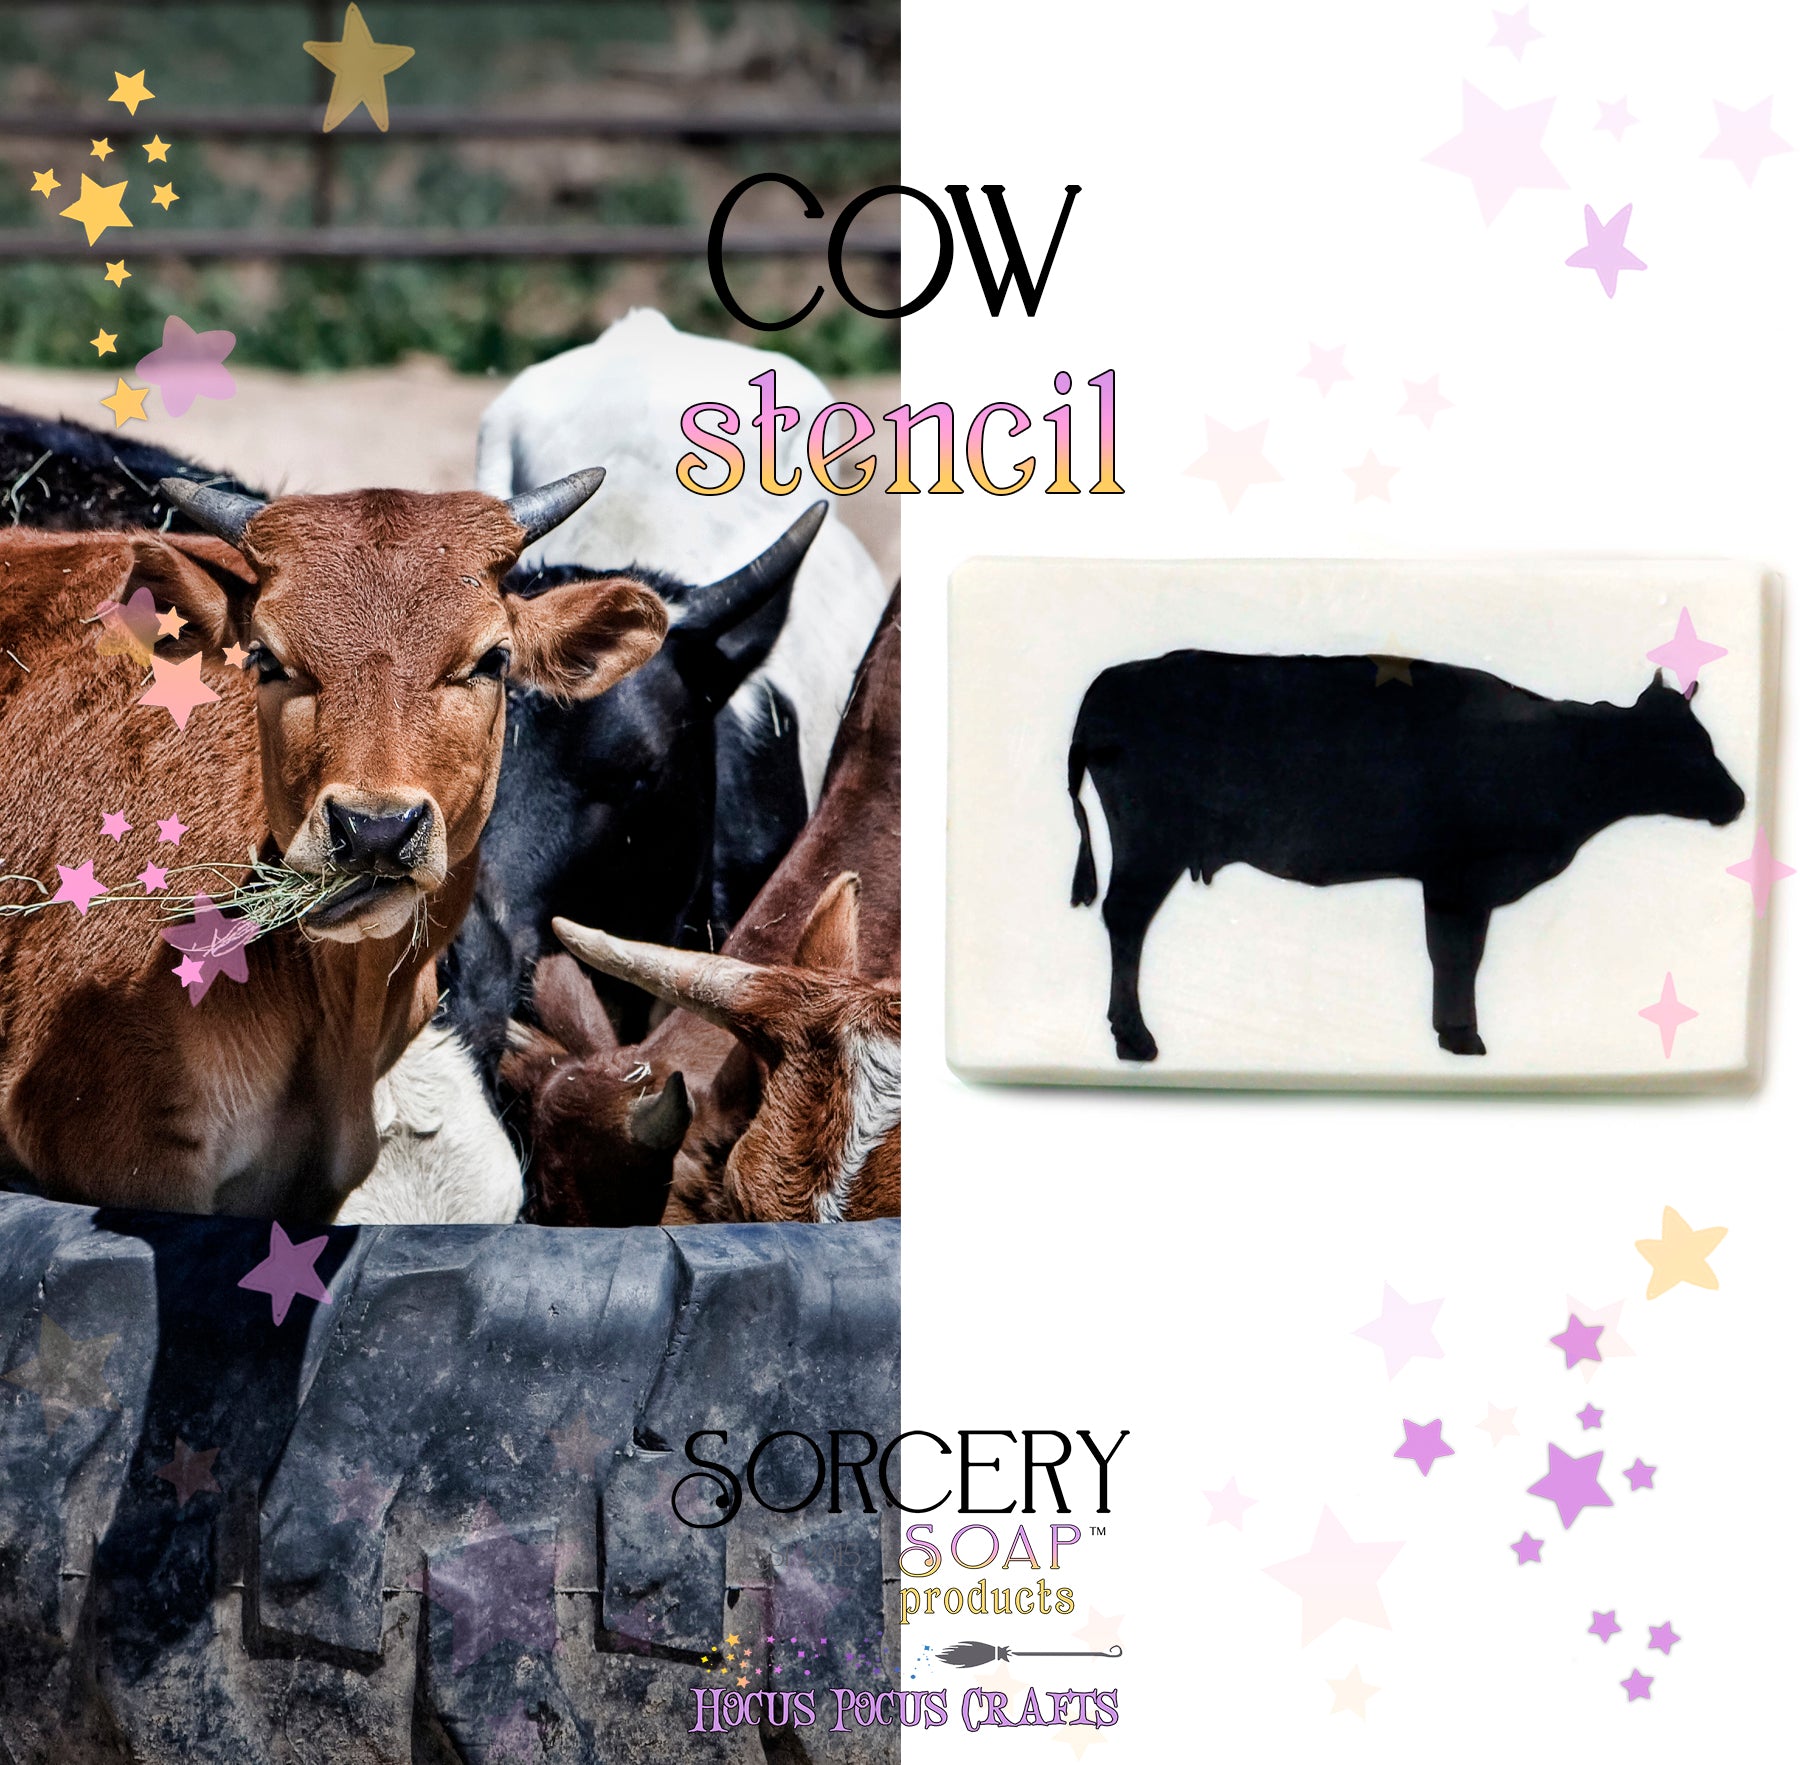 Cow stencil